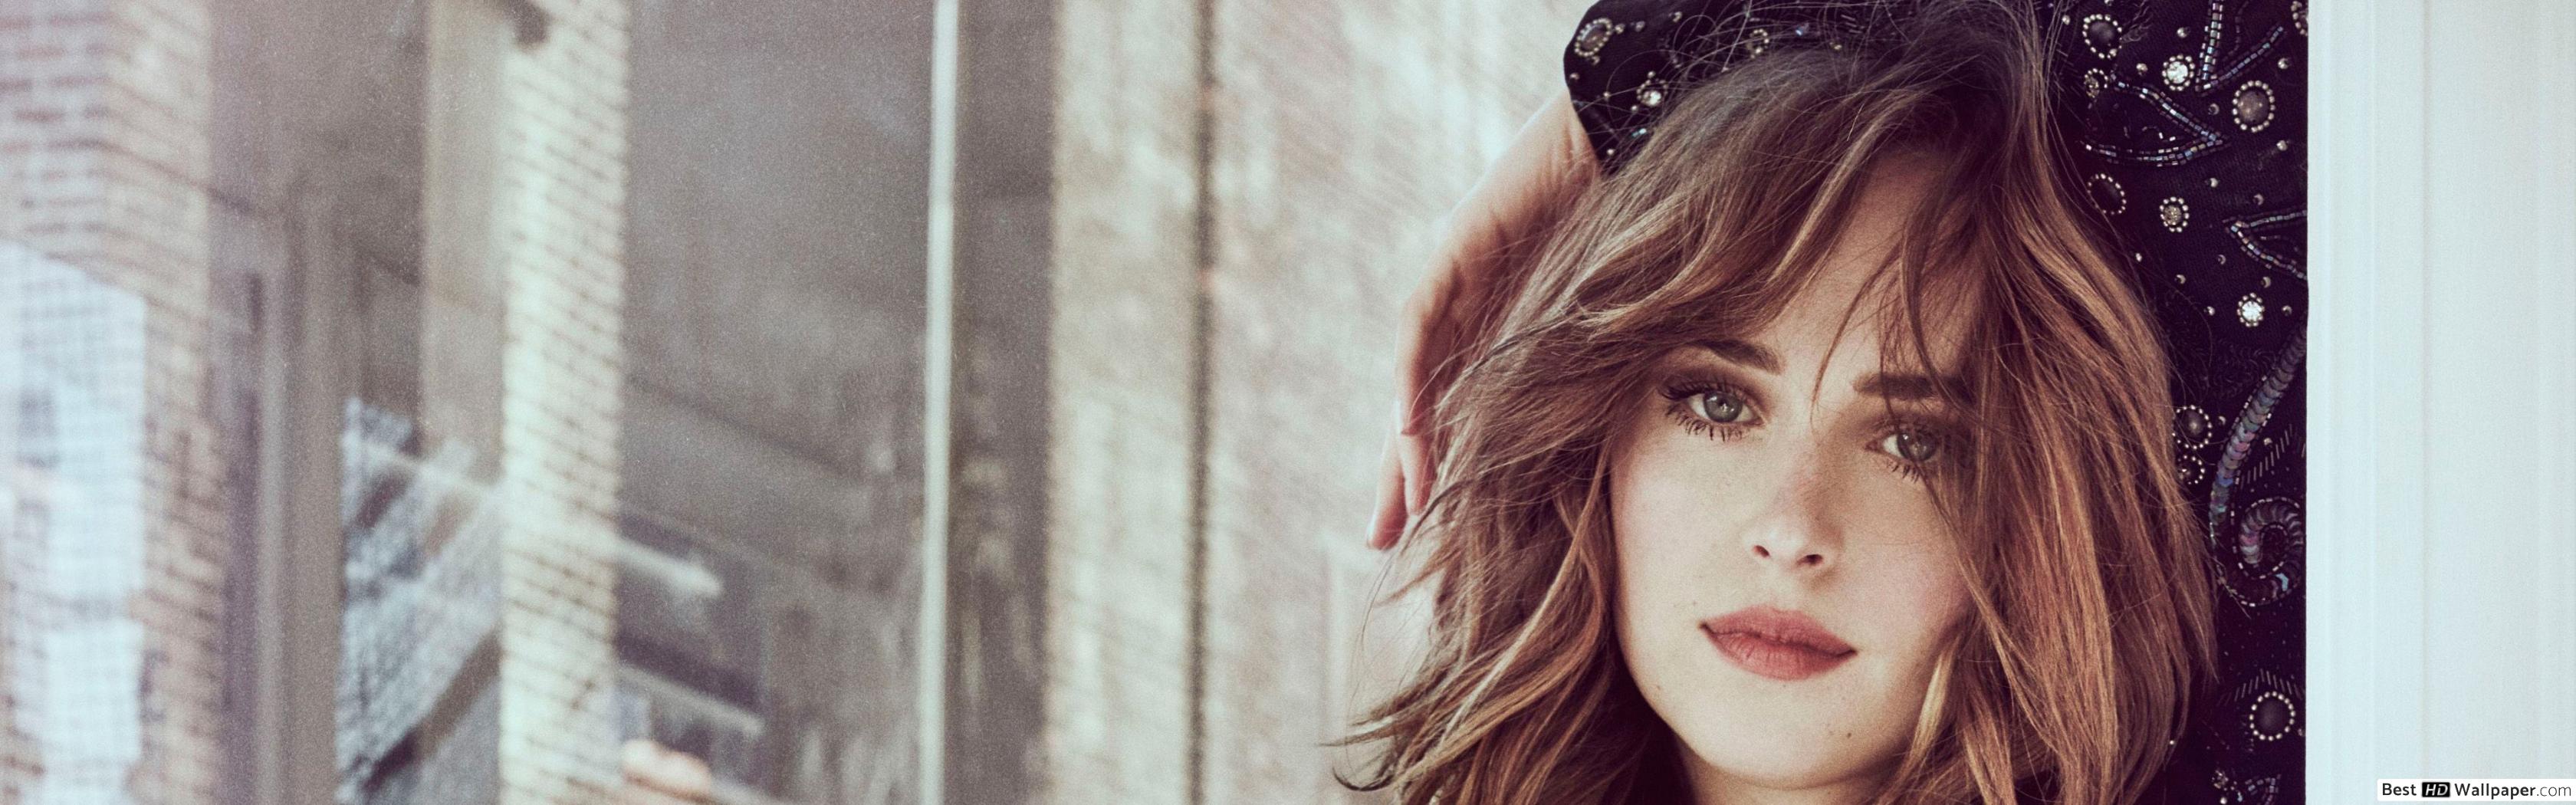 Gorgeous brunette actress Dakota Johnson HD wallpaper download